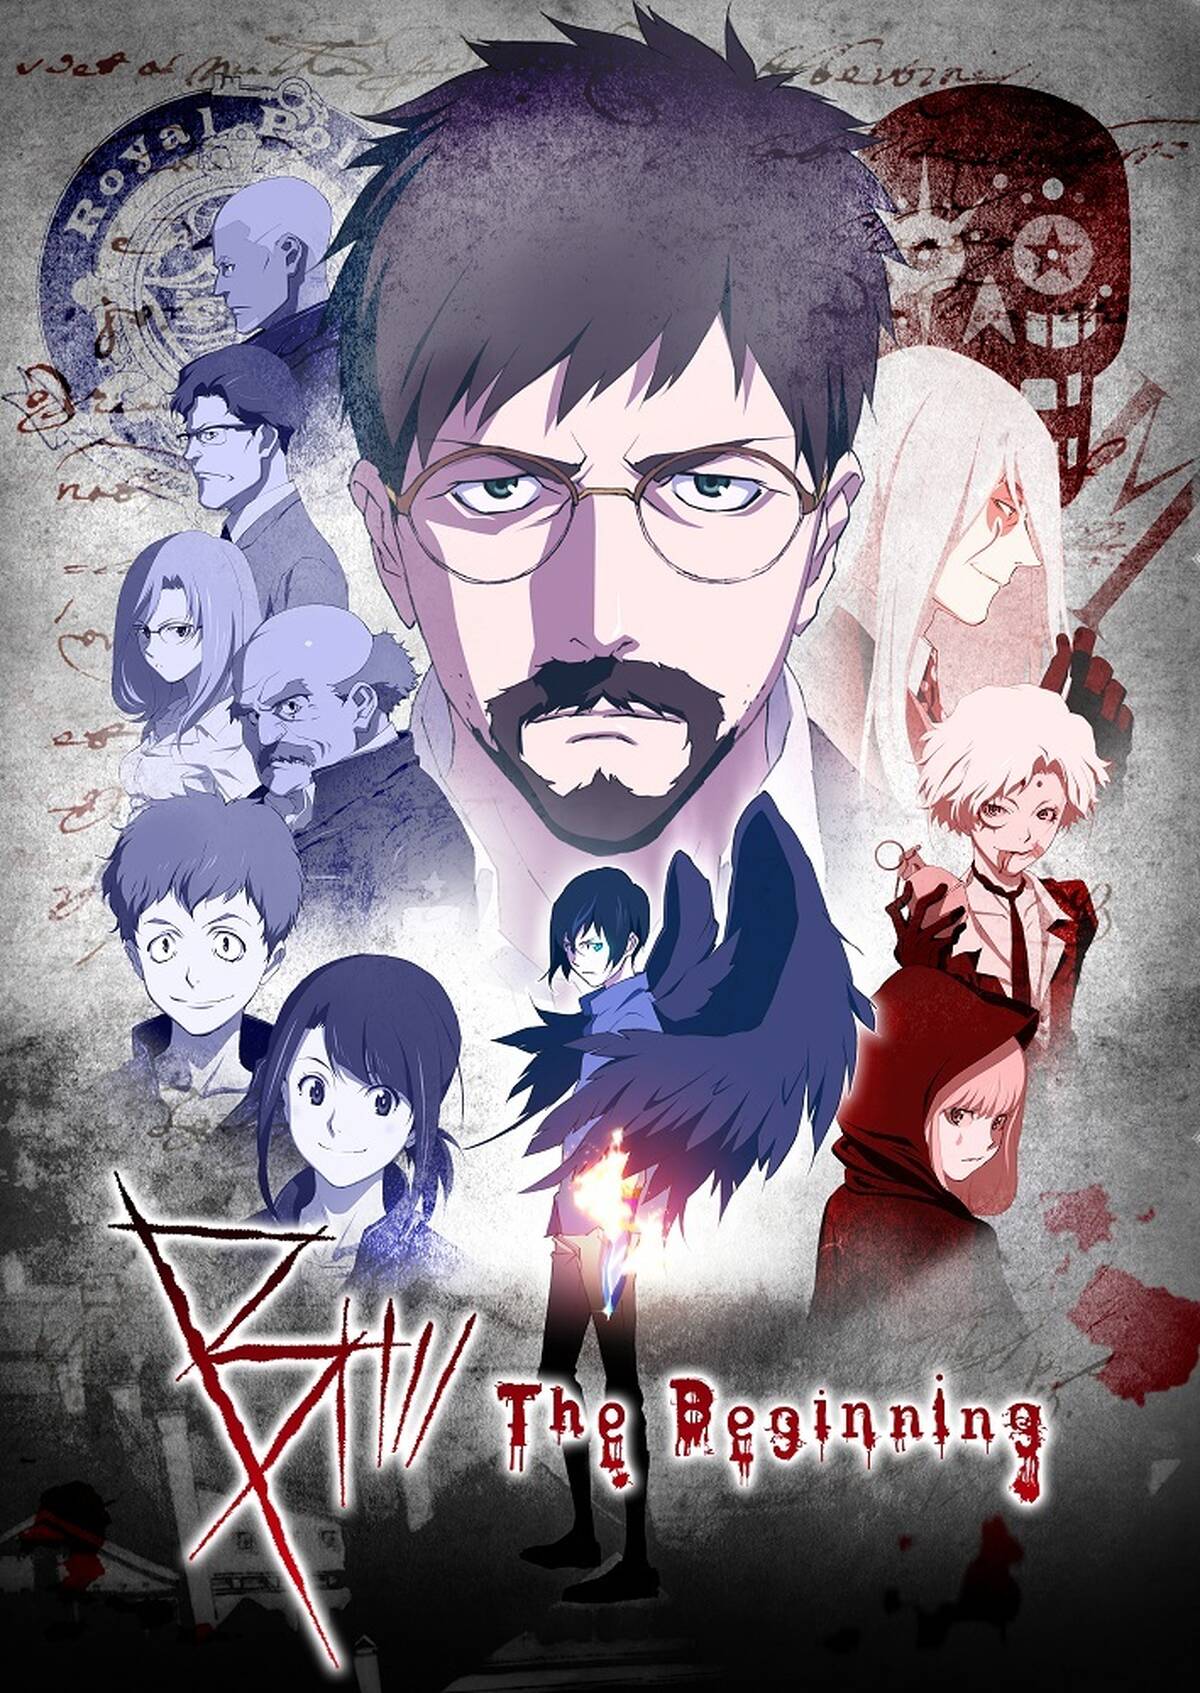 Netflixオリジナルアニメ B The Beginning 新ビジュアル 新場面カットを解禁 アキバ総研